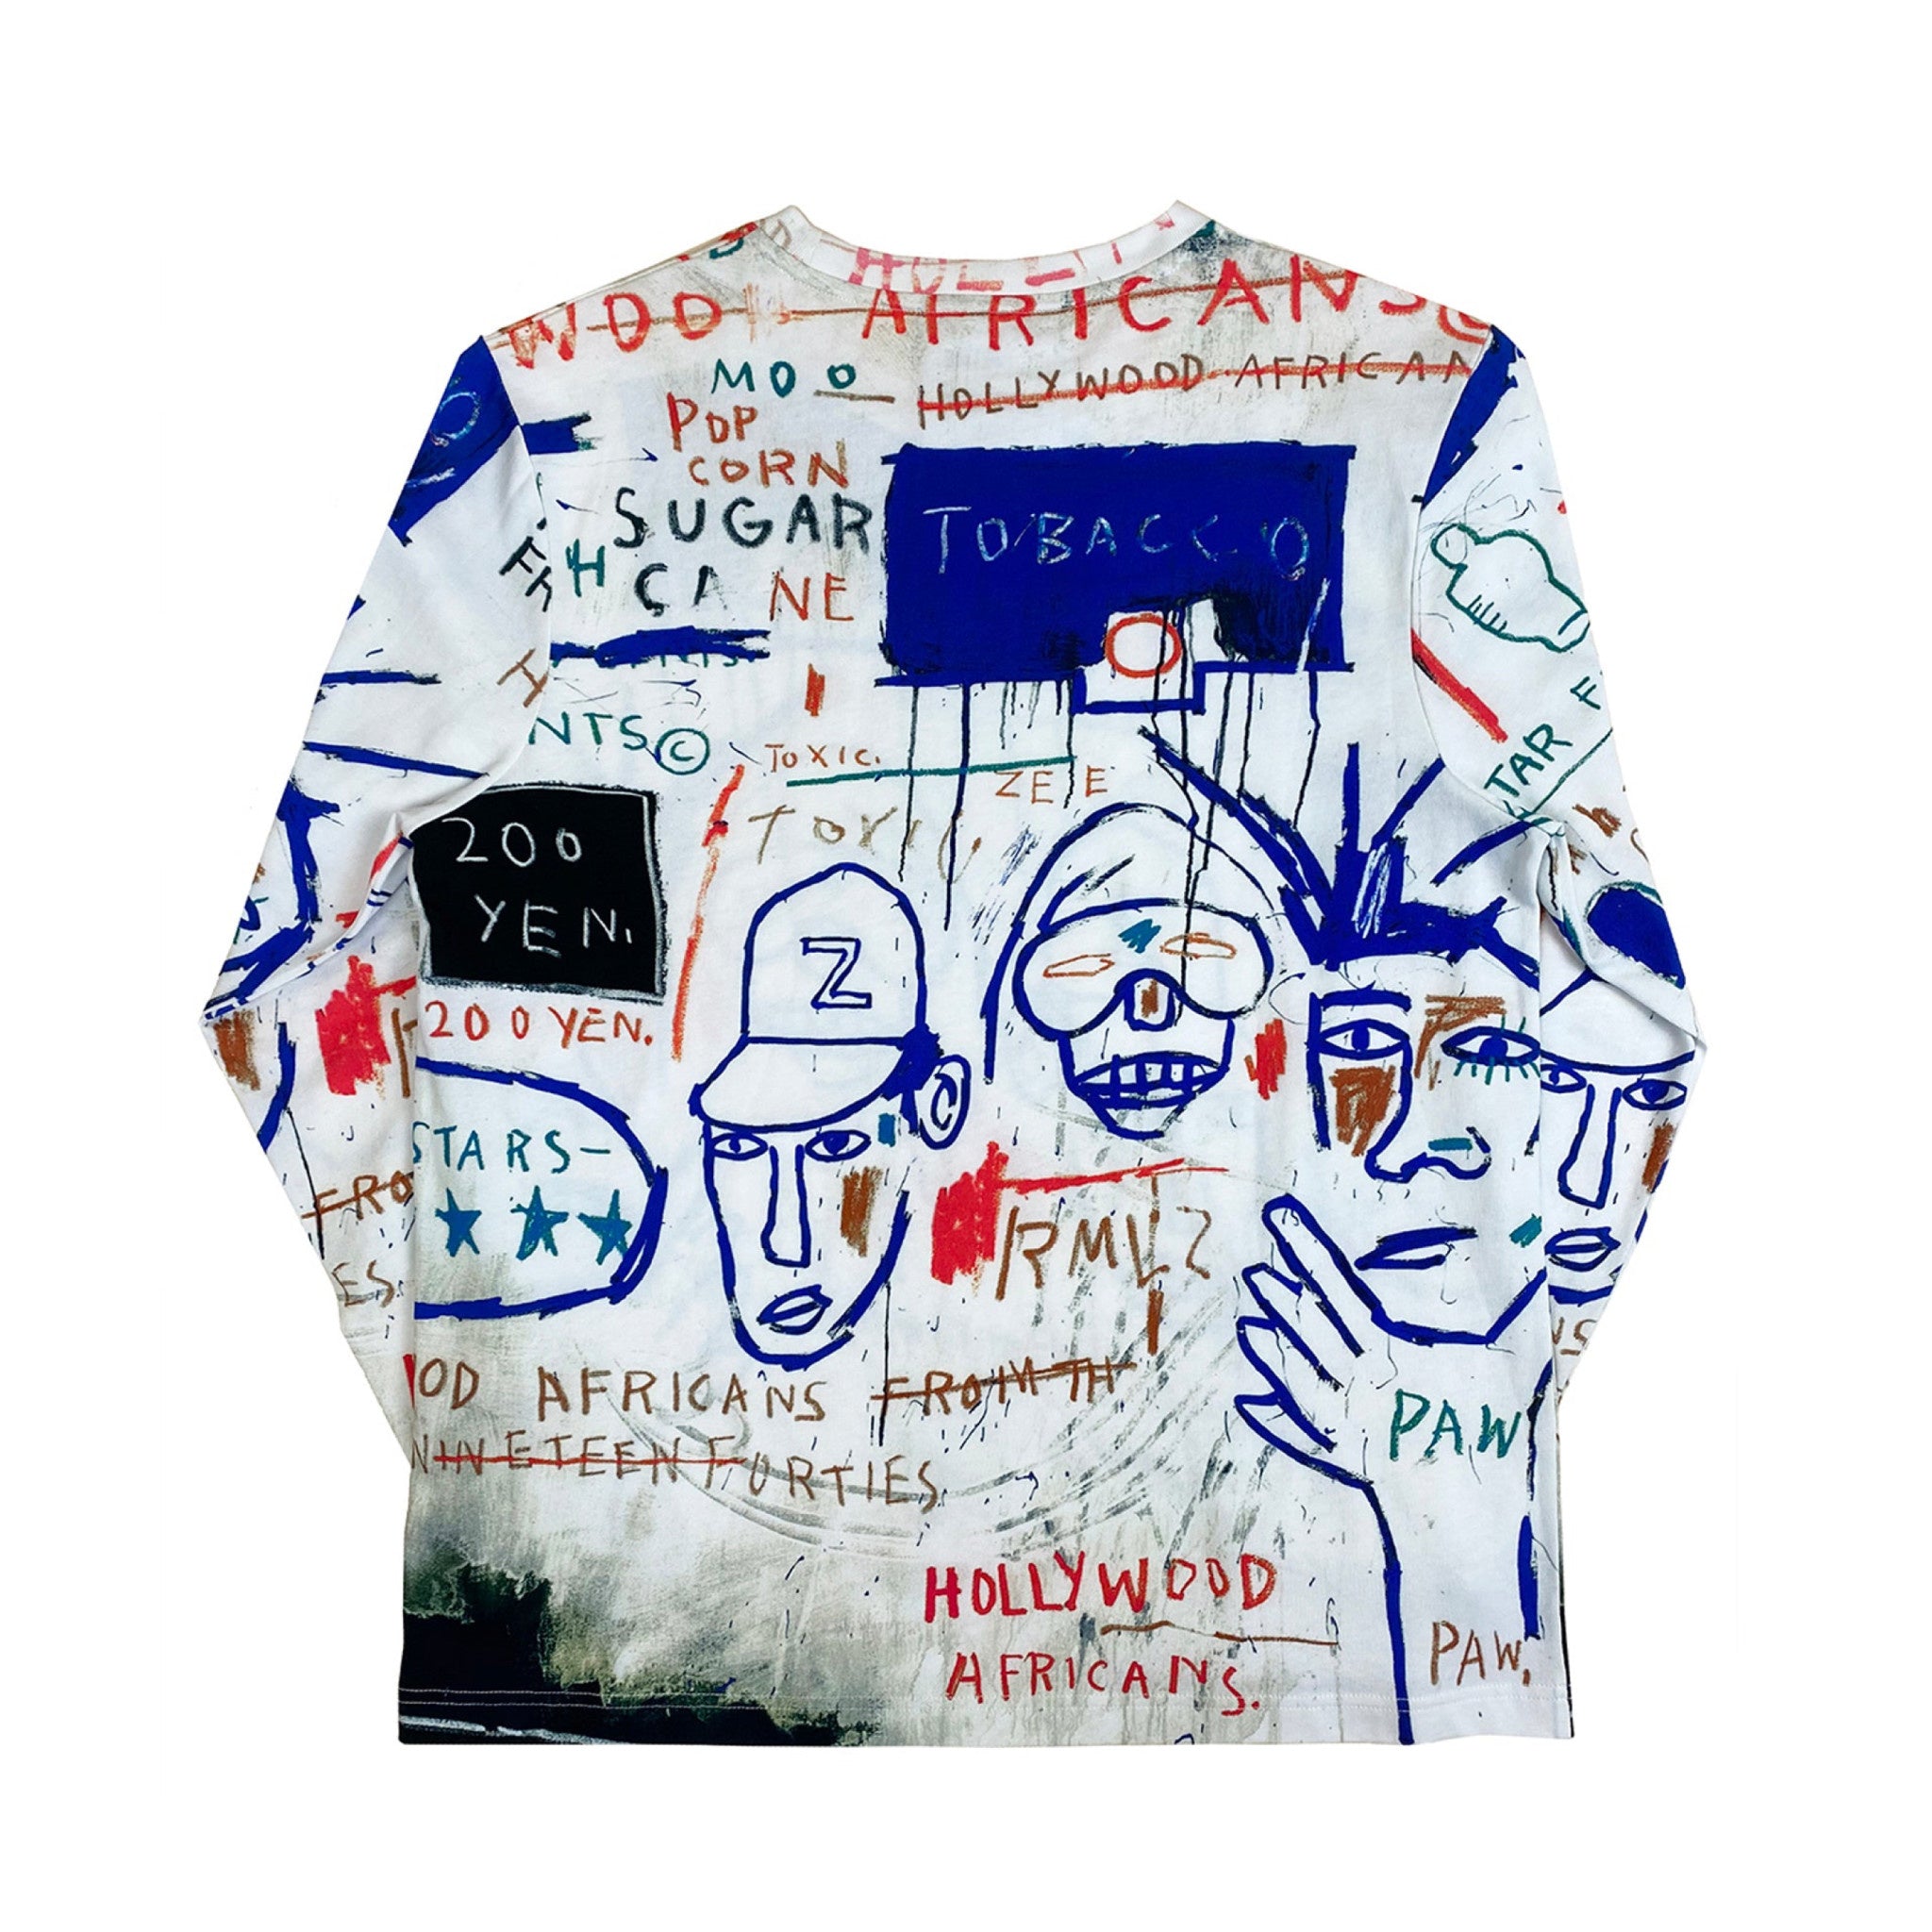 Basquiat HOLLYWOOD AFRICANS All-Over Long-Sleeve Shirt - Wynwood Walls Shop